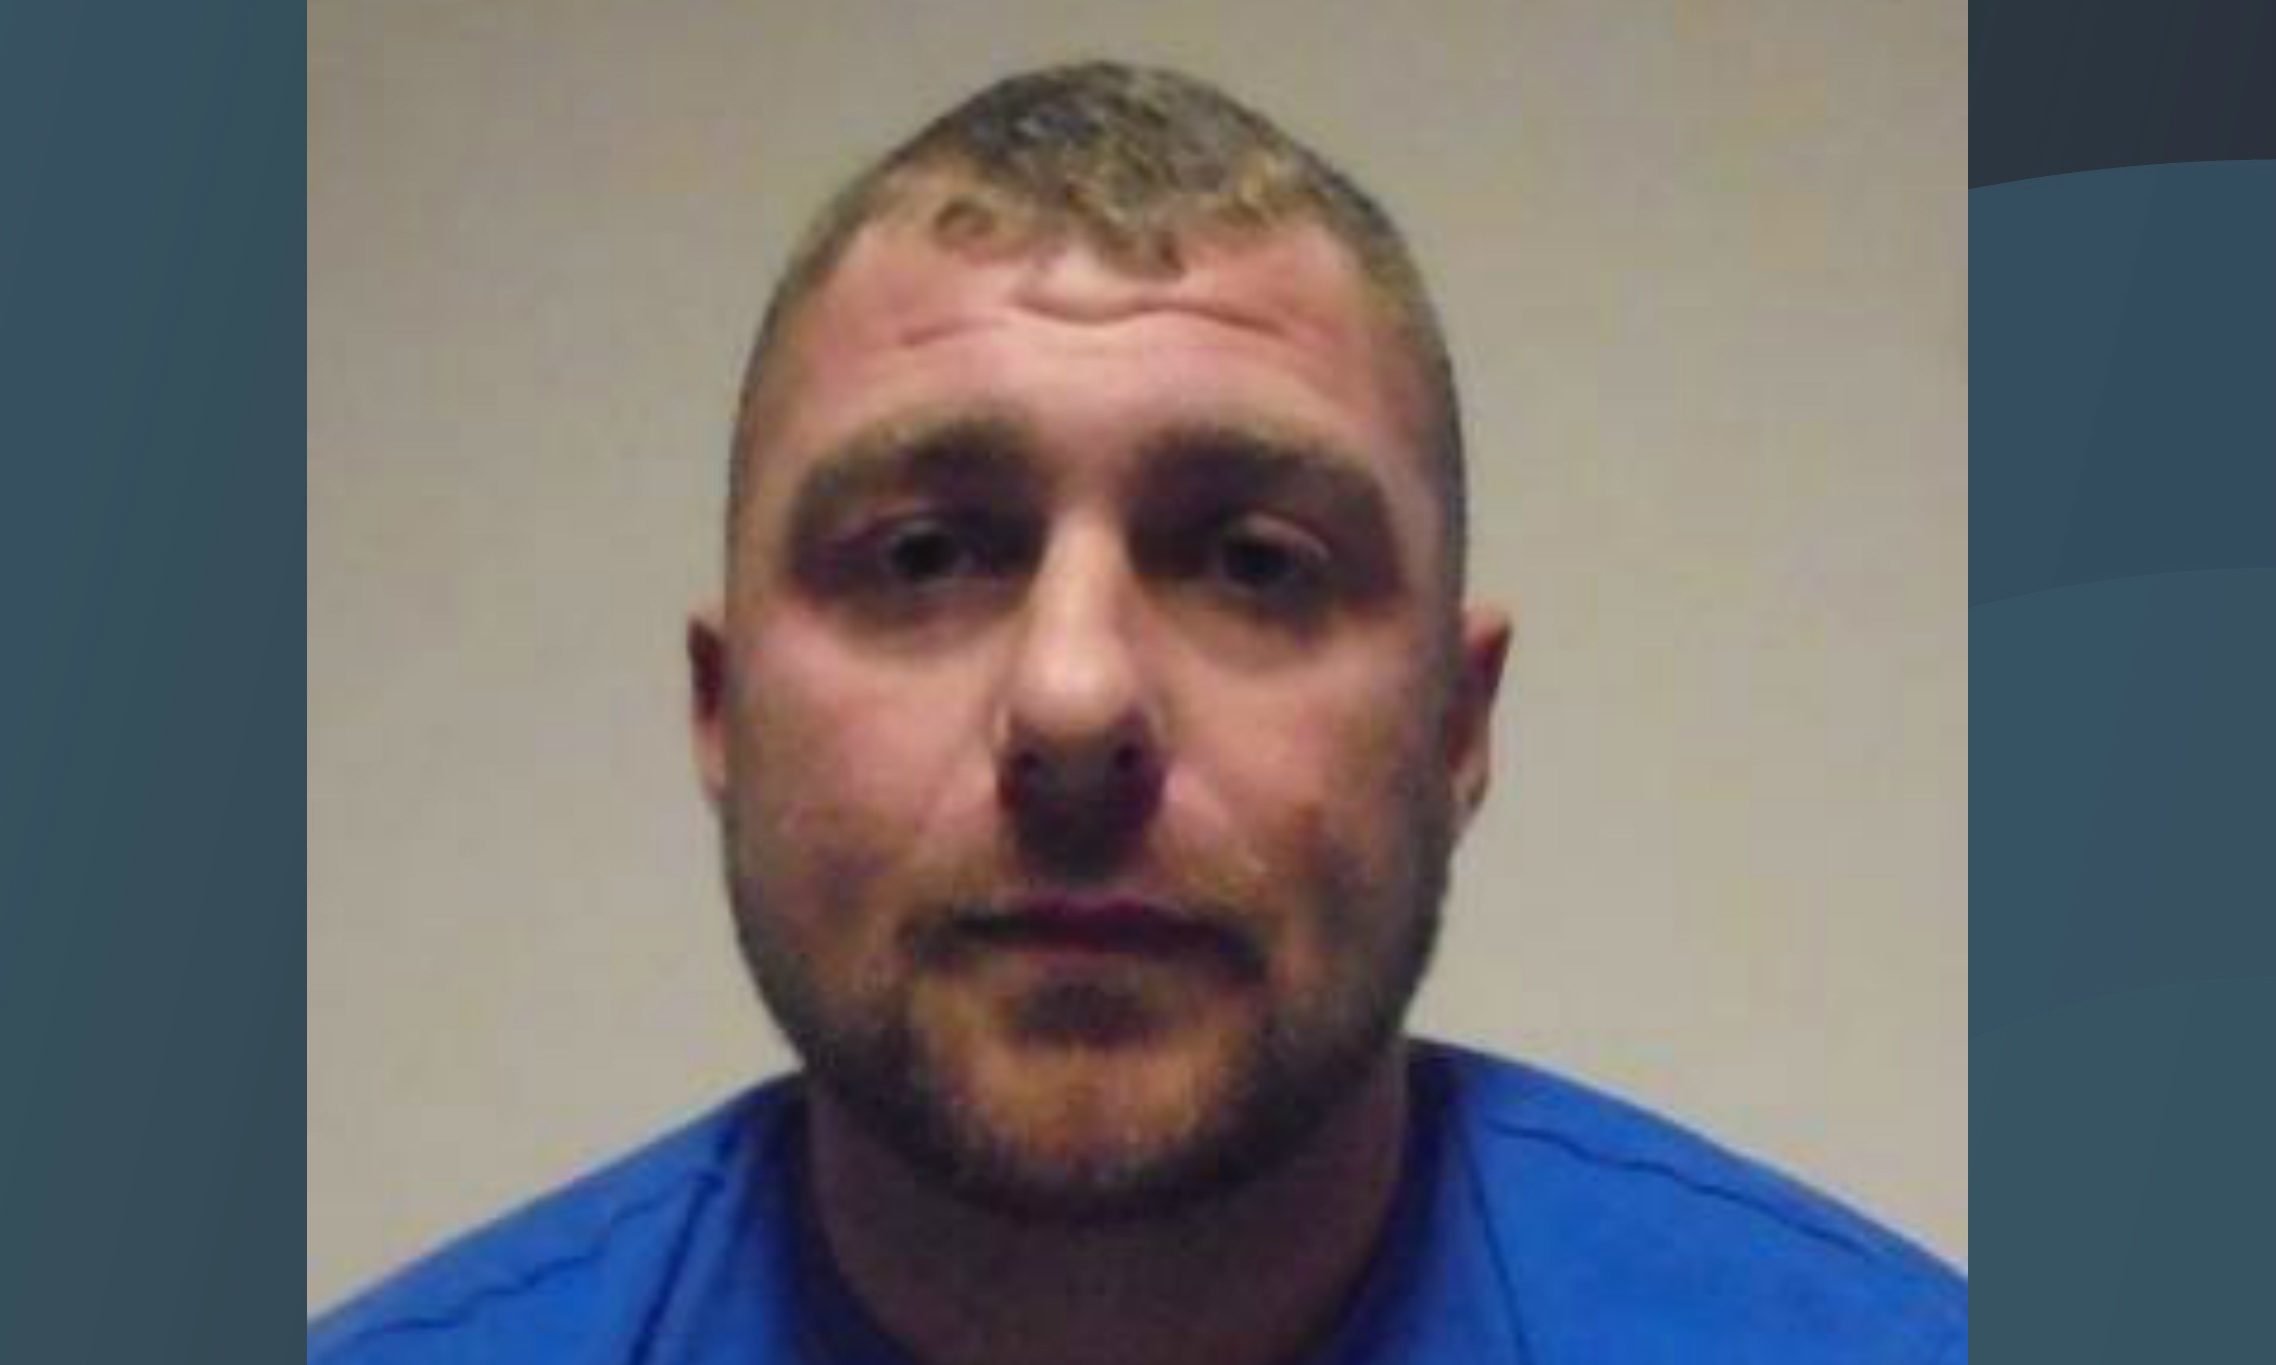 Craig MacKay was jailed at Dunfermline Sheriff Court.